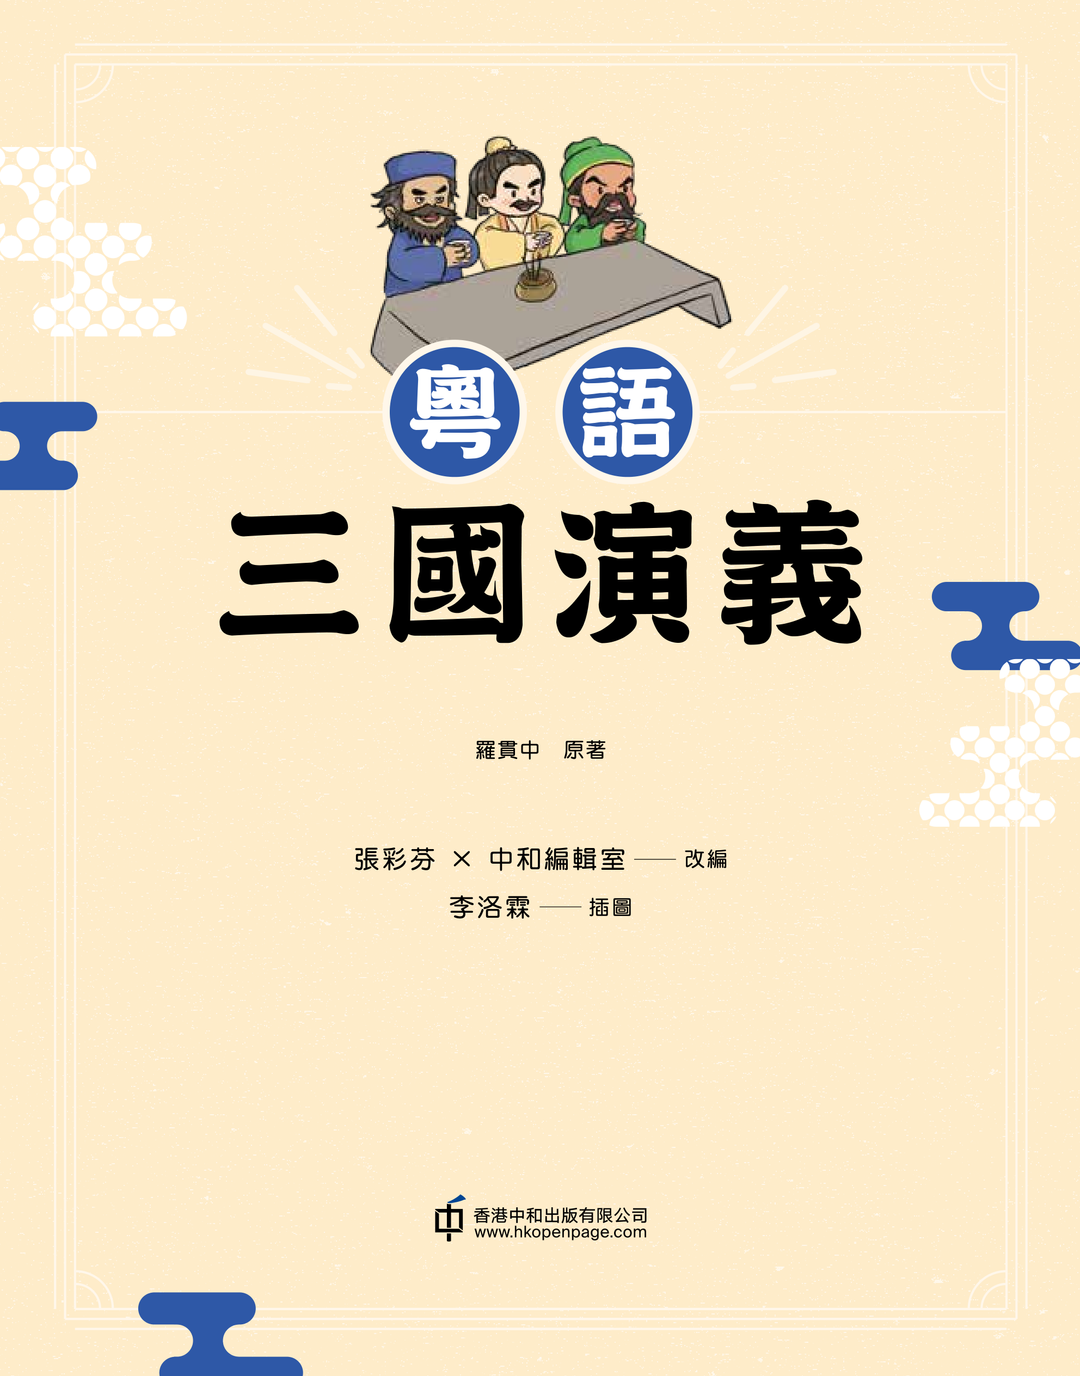 Romance of the Three Kingdoms in Cantonese • 粵語三國演義